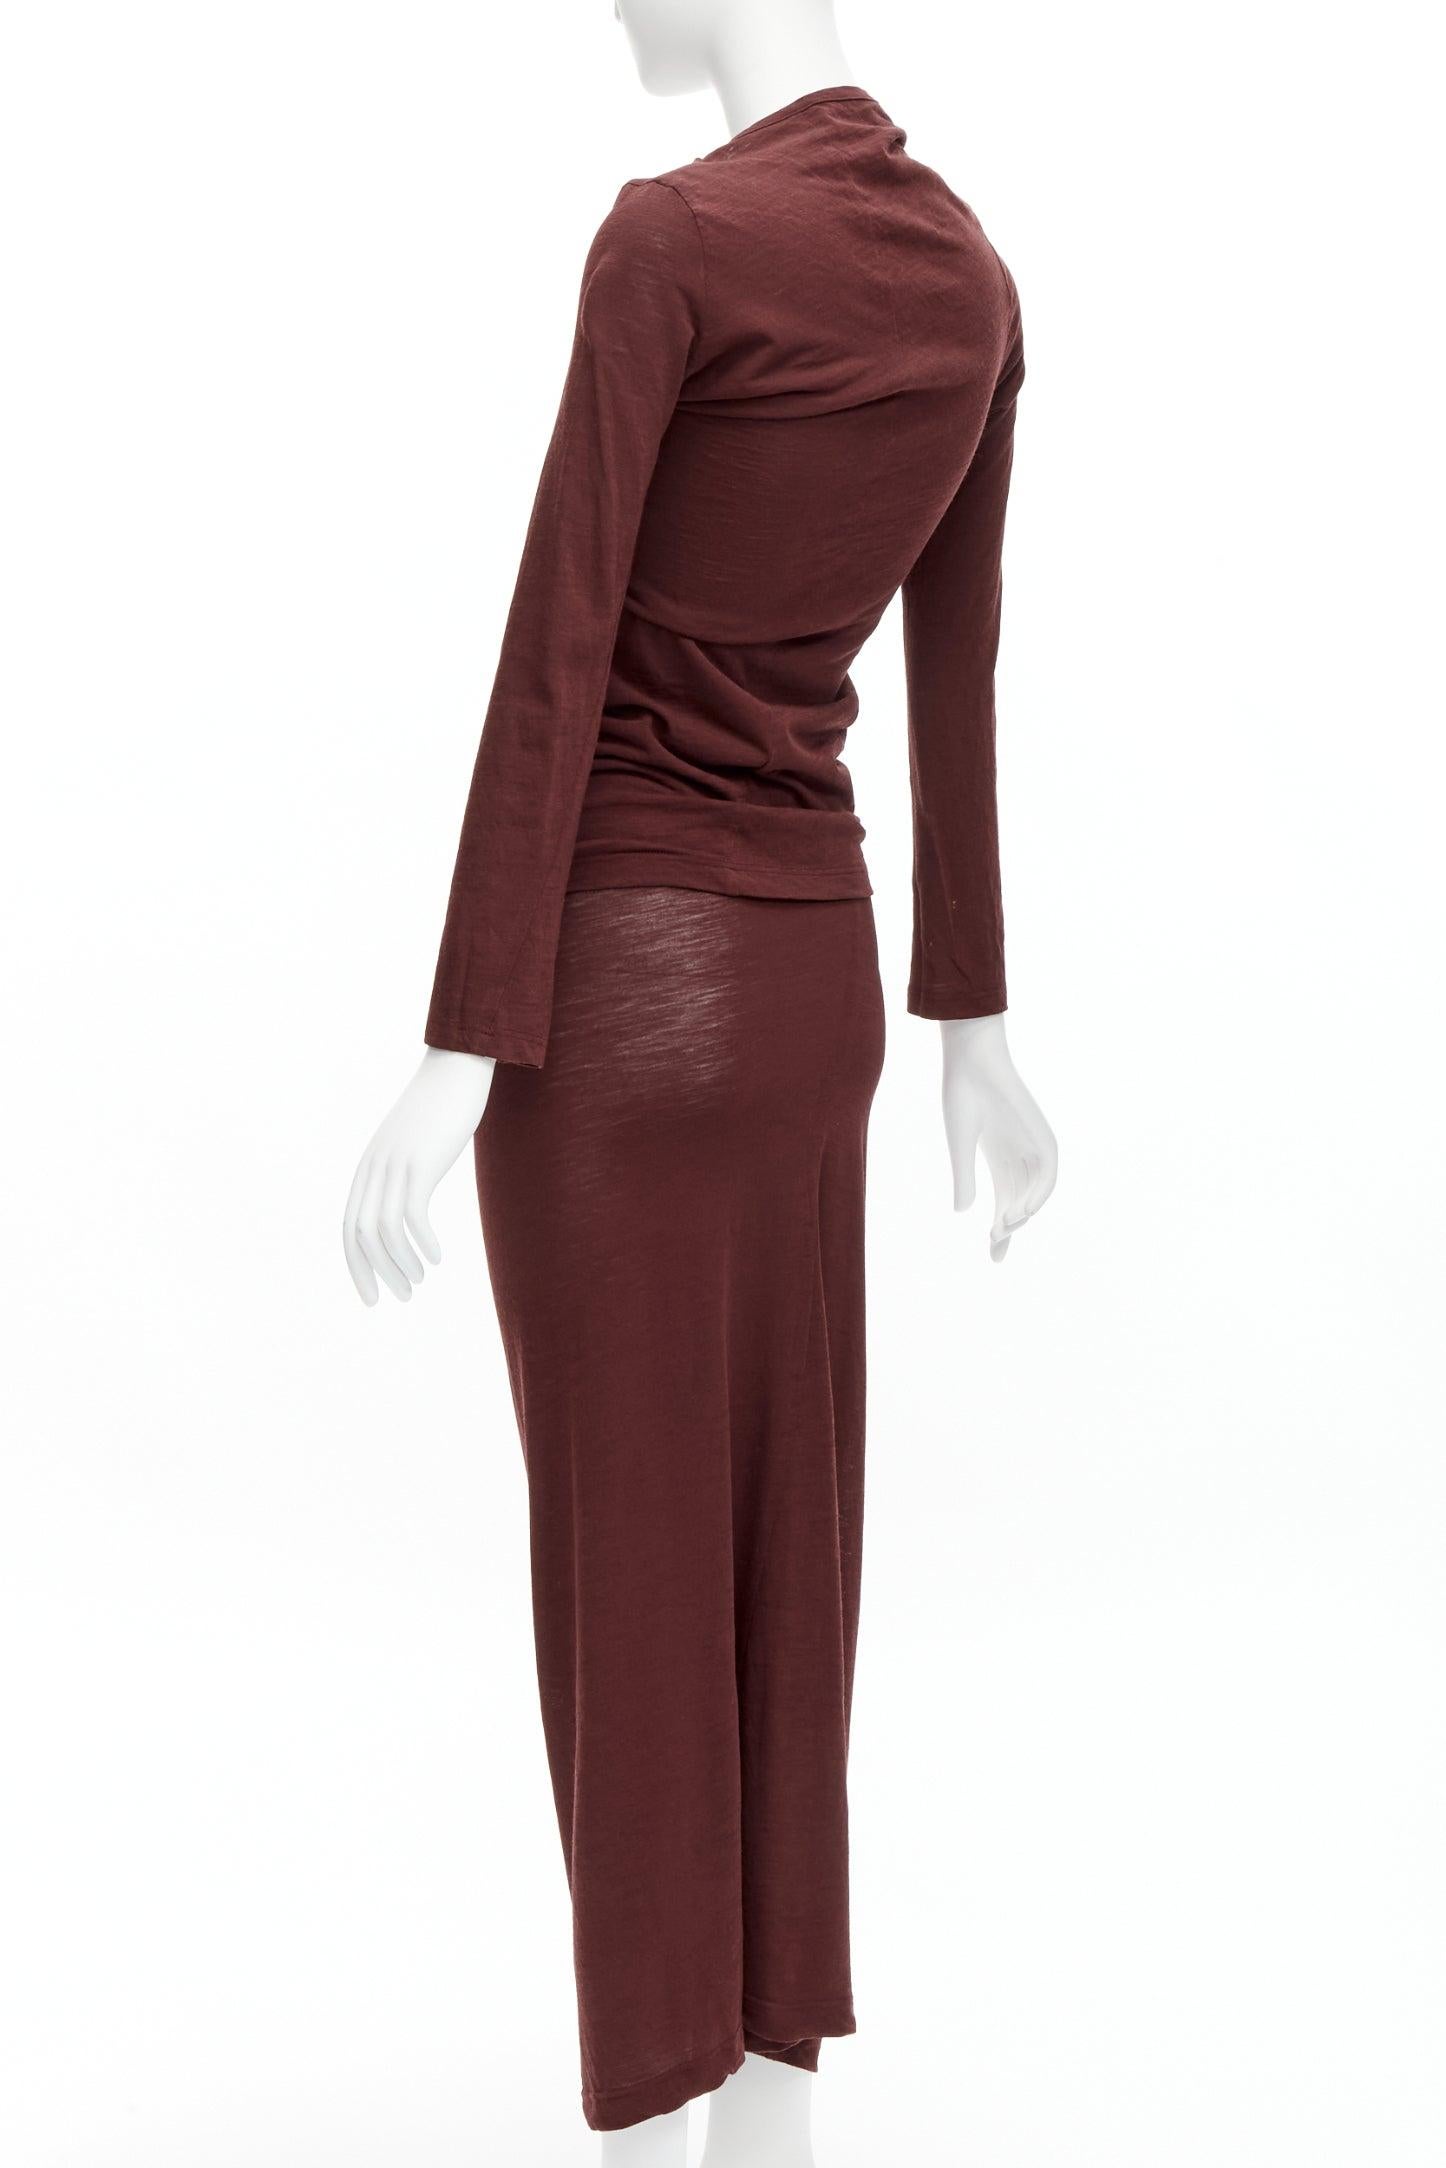 CDG COMME DES GARCONS burgundy brown bias cut stretch top midi skirt set S For Sale 2